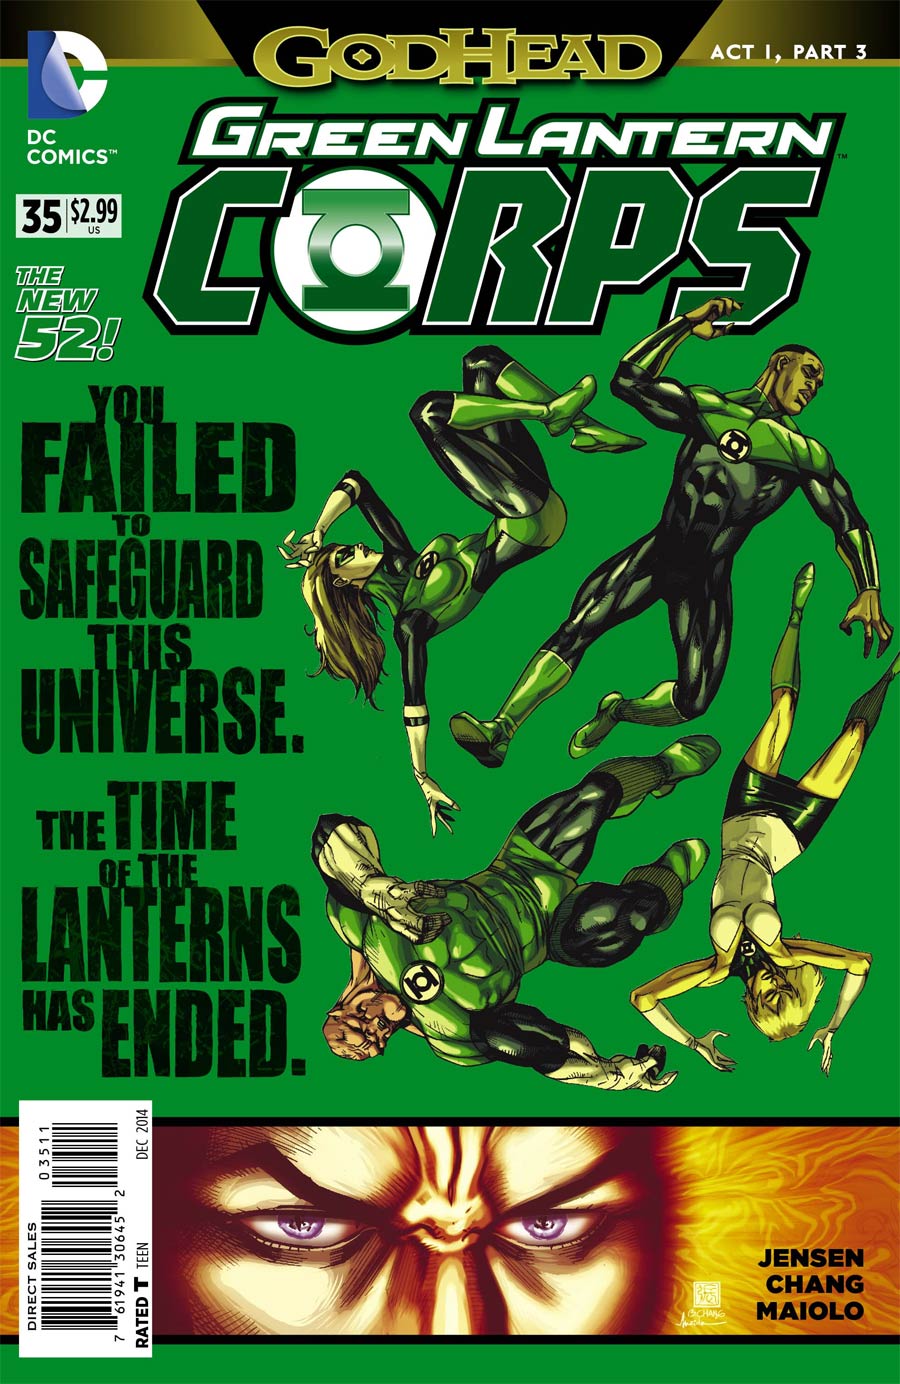 Green Lantern Corps Vol 3 #35 Cover A Regular Bernard Chang Cover (Godhead Act 1 Part 3)